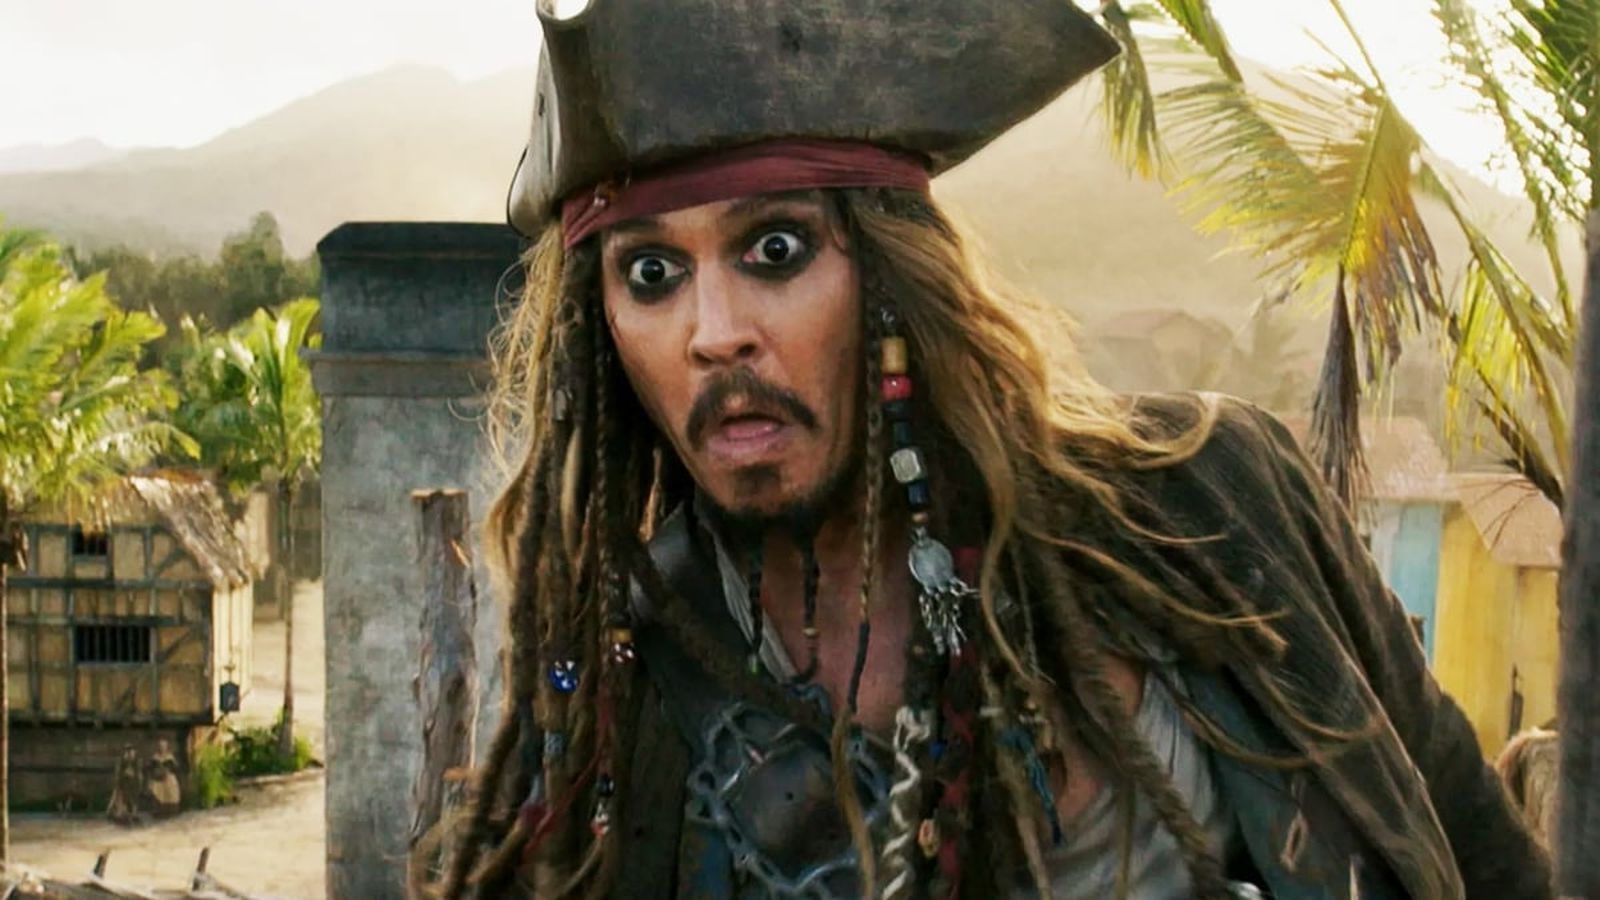 Pirati dei Caraibi: l'action figure di Jack Sparrow Hot Toys è spaventosamente simile al vero Johnny Depp